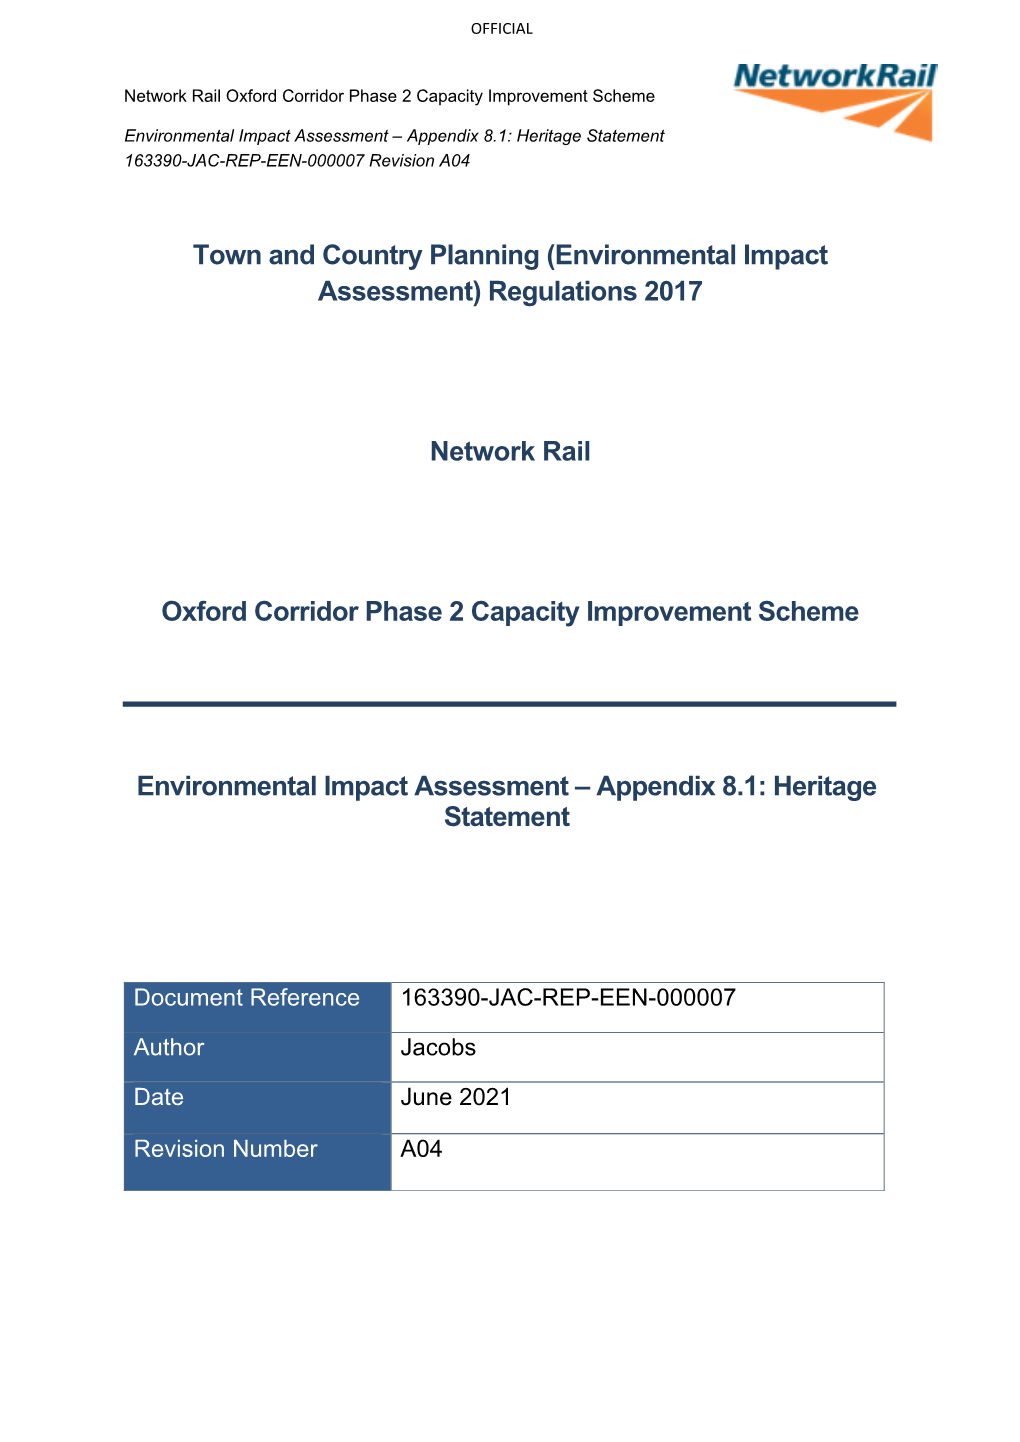 Environmental Impact Assessment – Appendix 8.1: Heritage Statement 163390-JAC-REP-EEN-000007 Revision A04